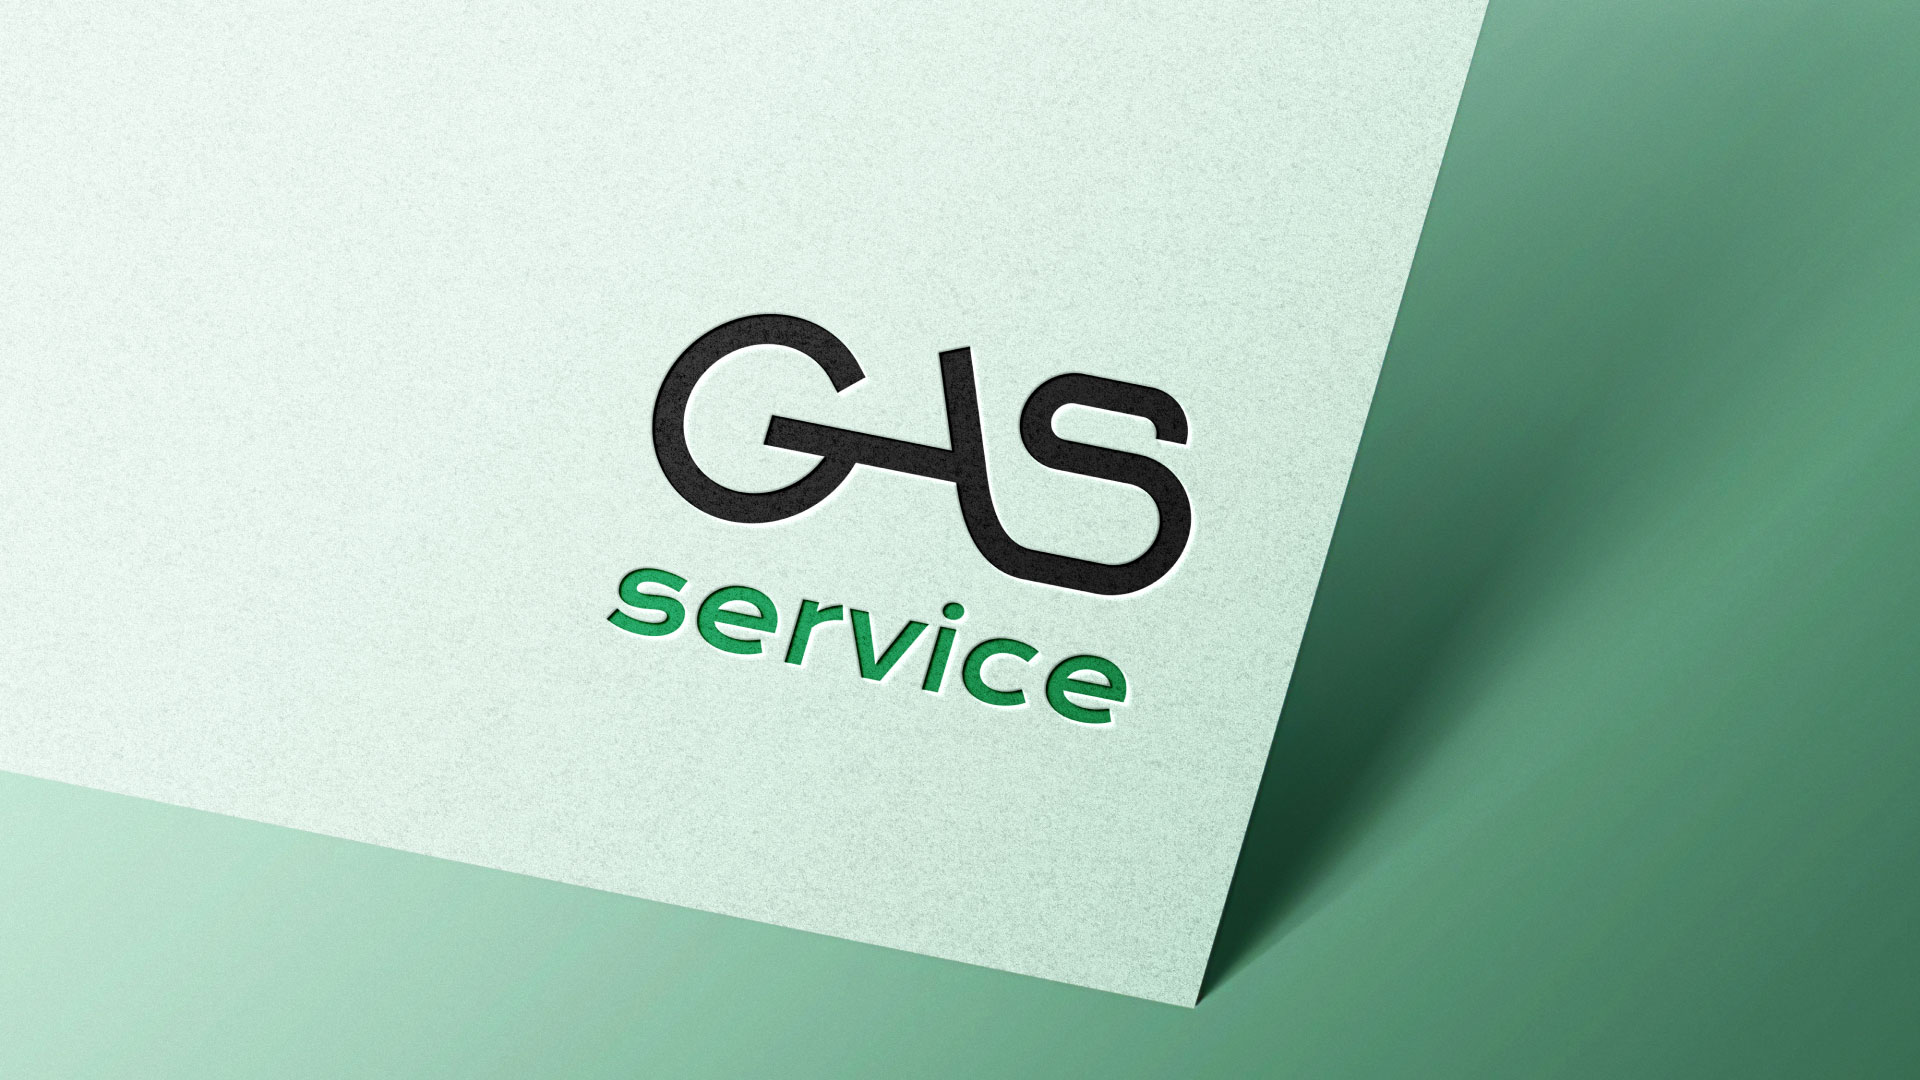 Разработка логотипа компании «Сервис газ» в 